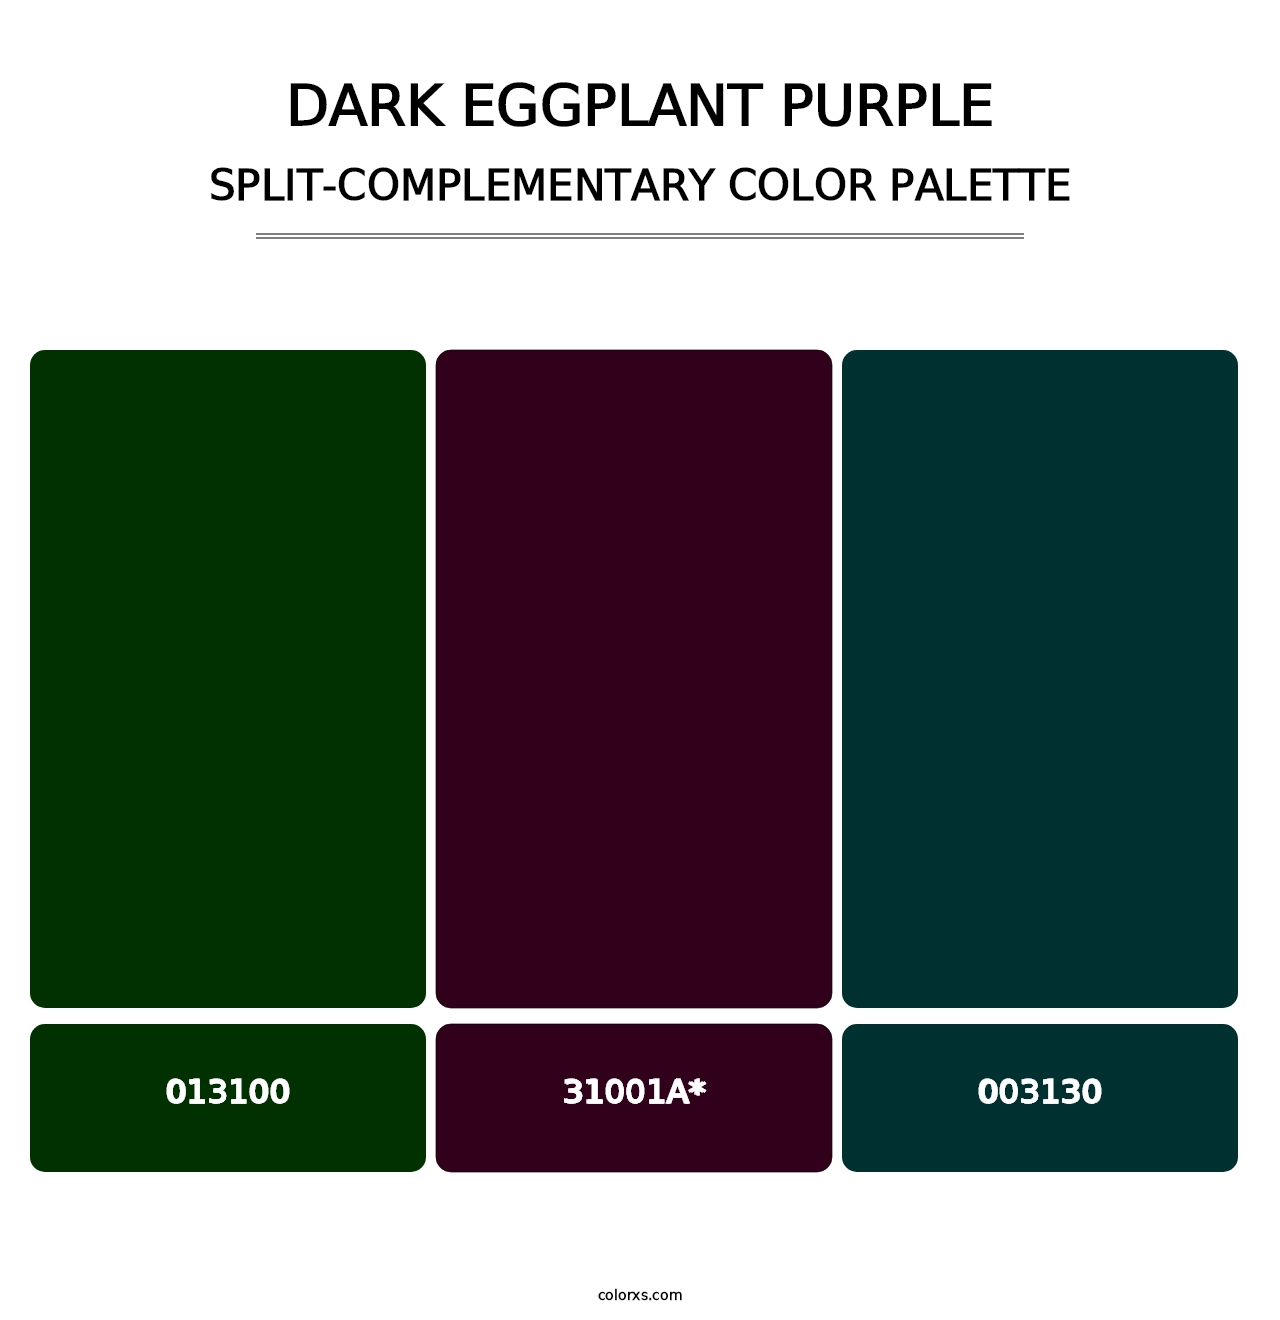 Dark Eggplant Purple - Split-Complementary Color Palette